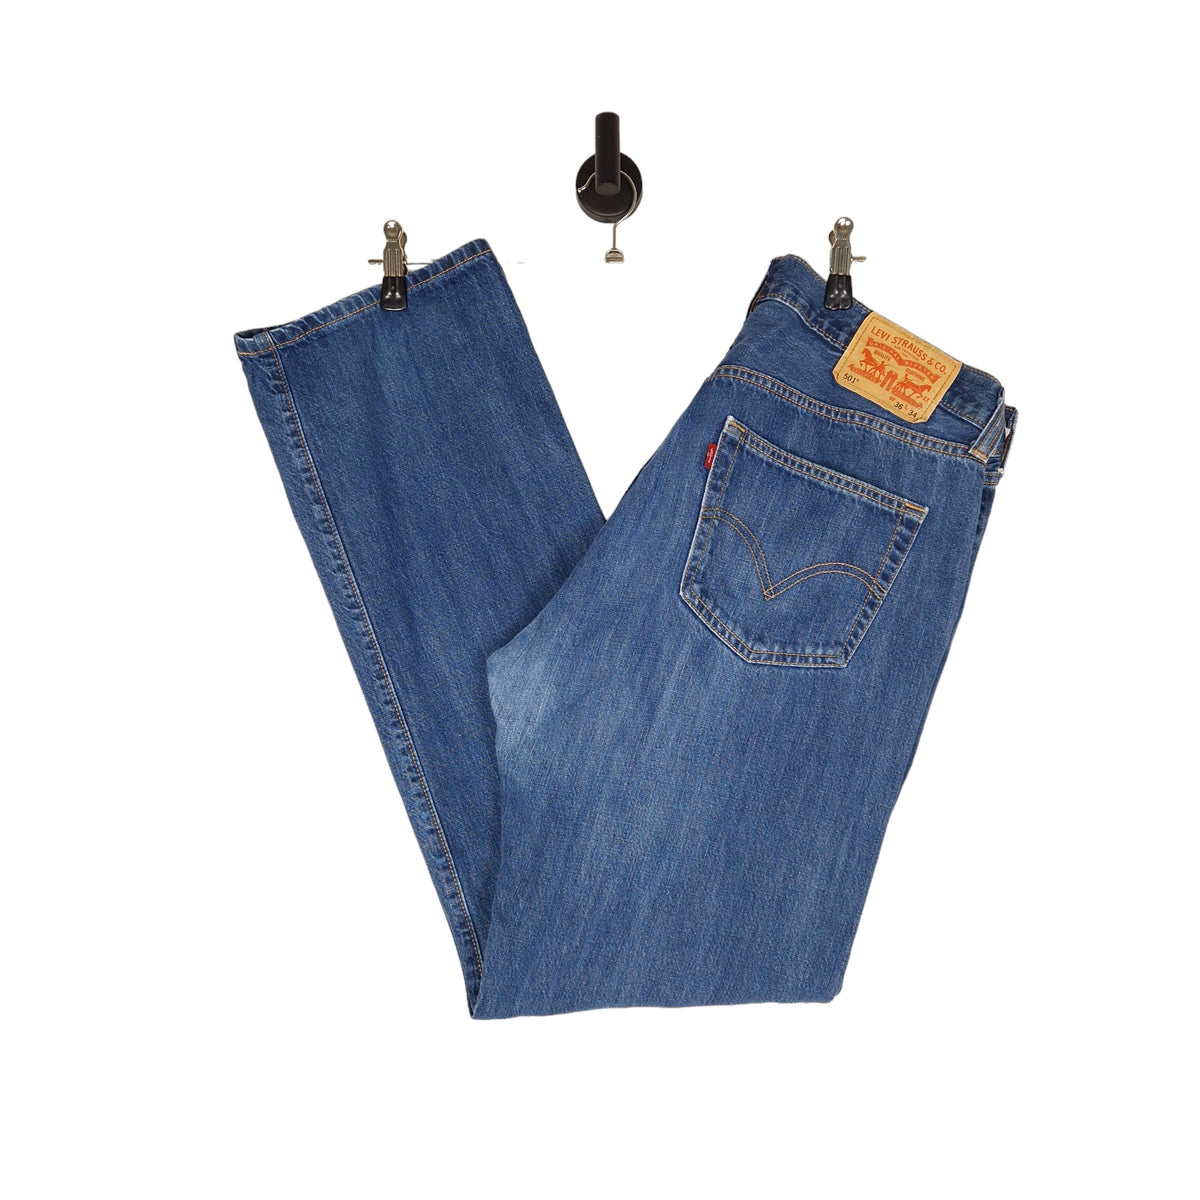 Levi's 501's Denim Jeans - Size W37 L34